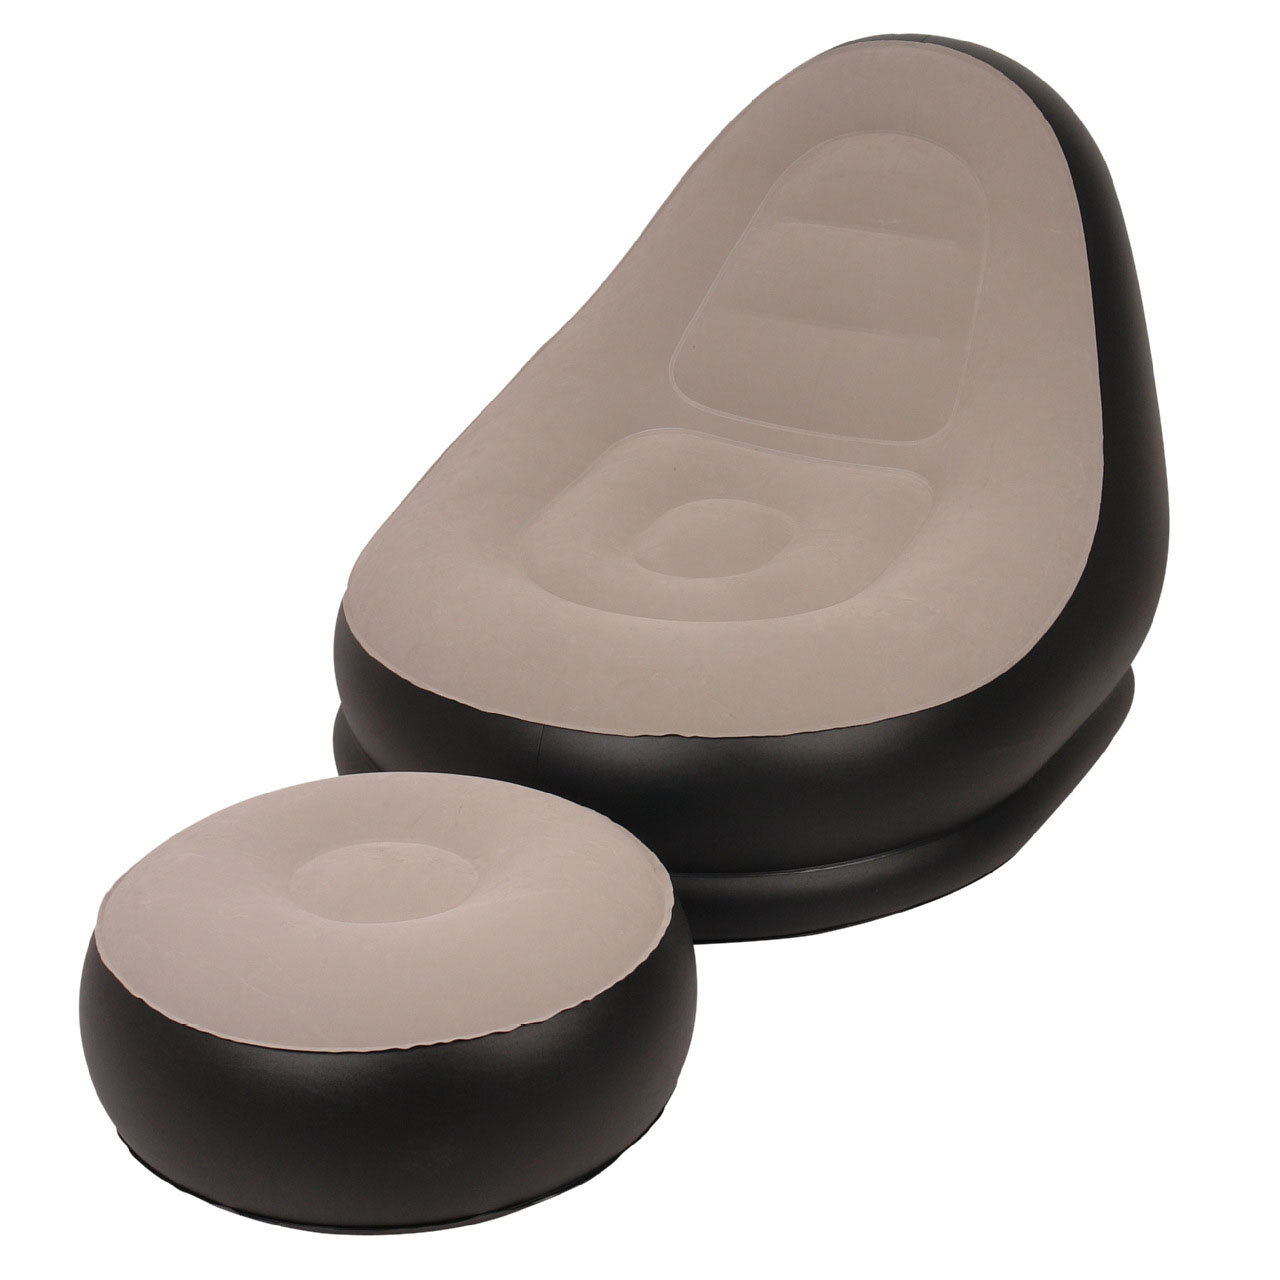 

JILONG Portable Flocking Fast Inflatable Lazy Sofa Sleep Bed Set Foot Cushion Home Garden Furniture, Dark grey